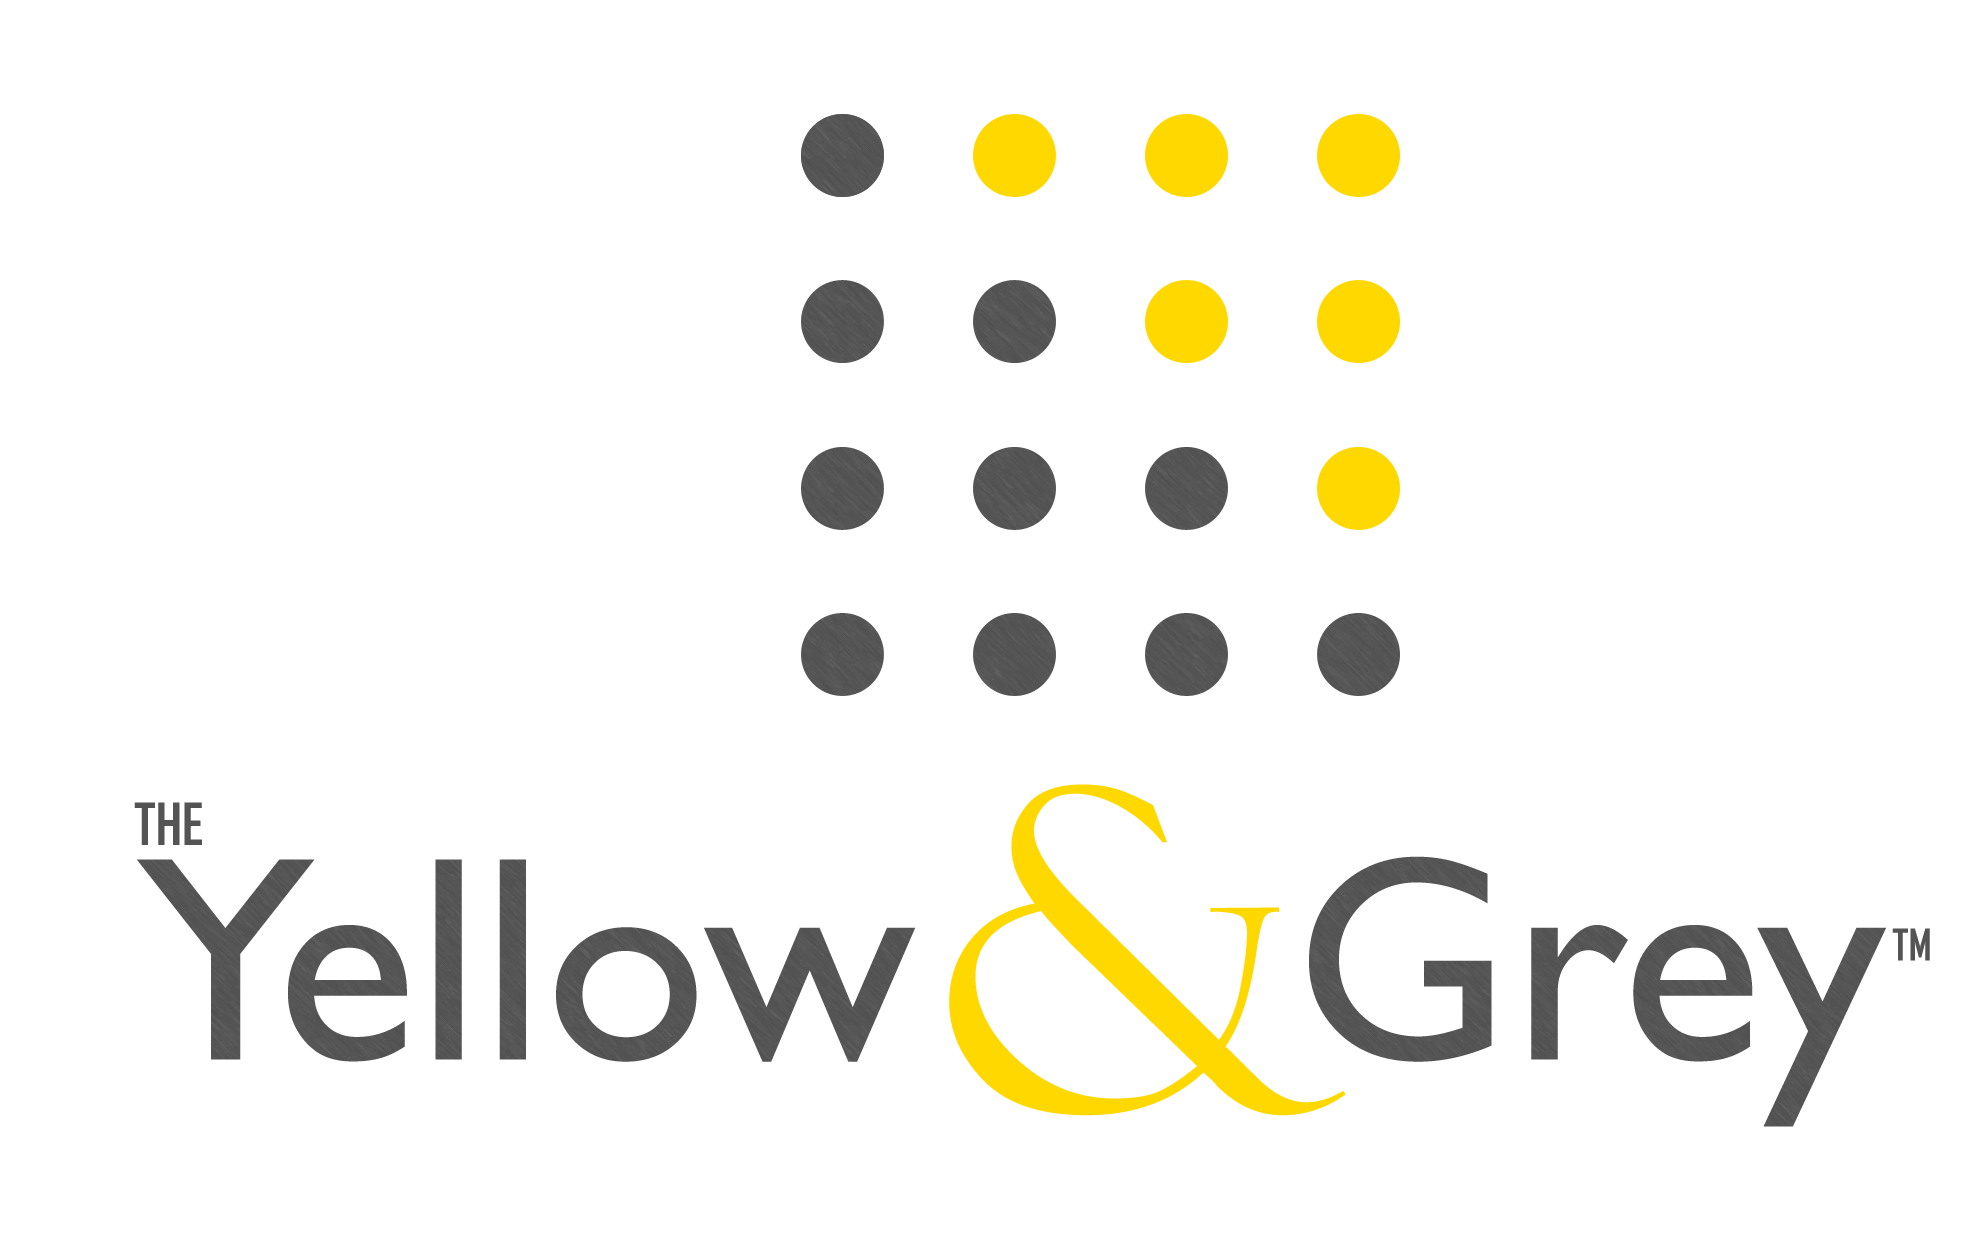 Grey Yellow Circle Logo - The Yellow & Grey